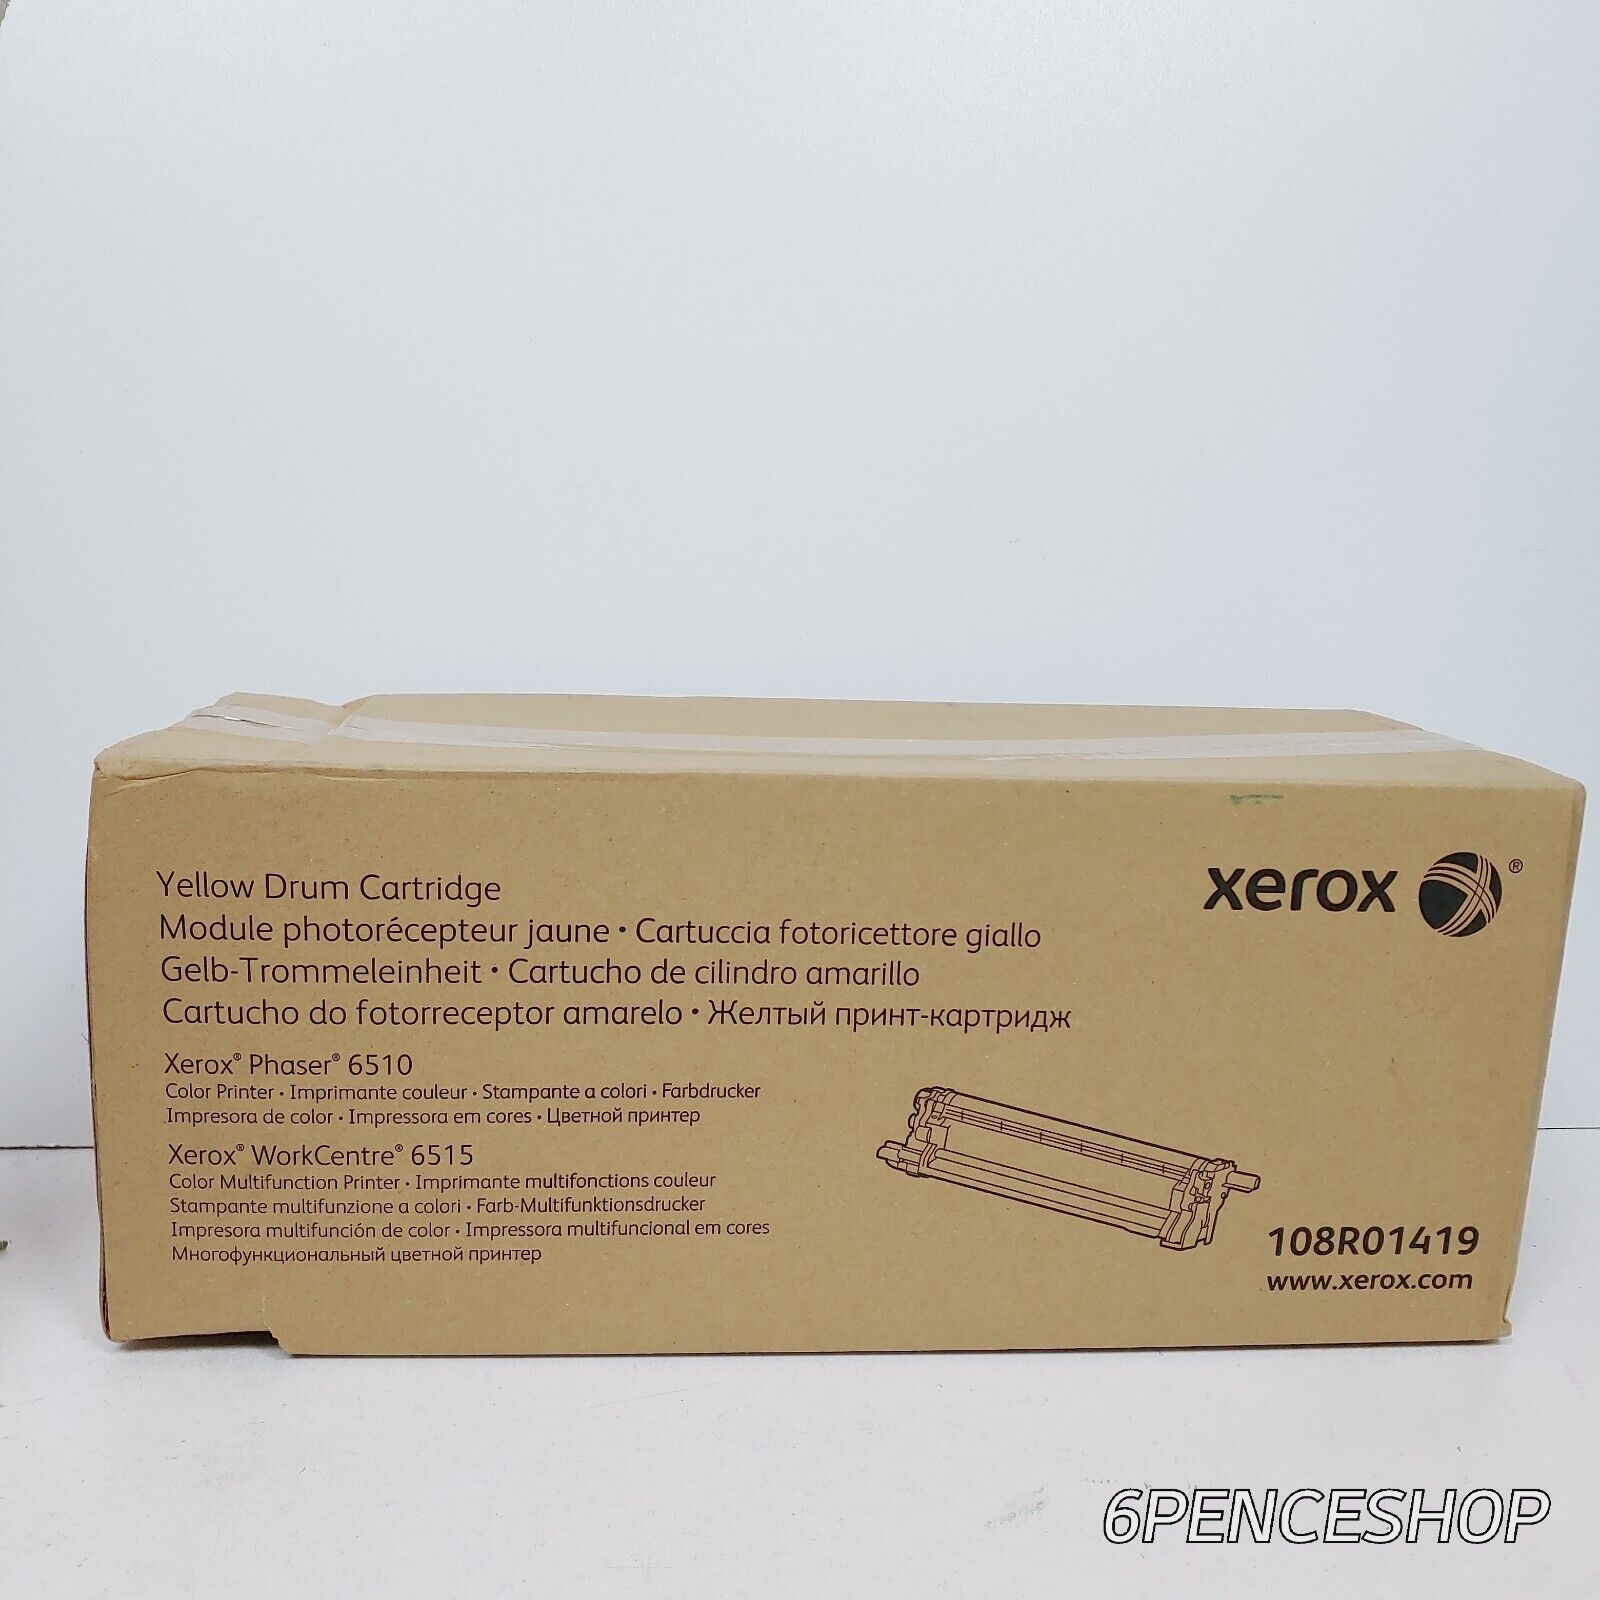 New *Deformed Box* Xerox 108R01419 Yellow Drum Cartridge